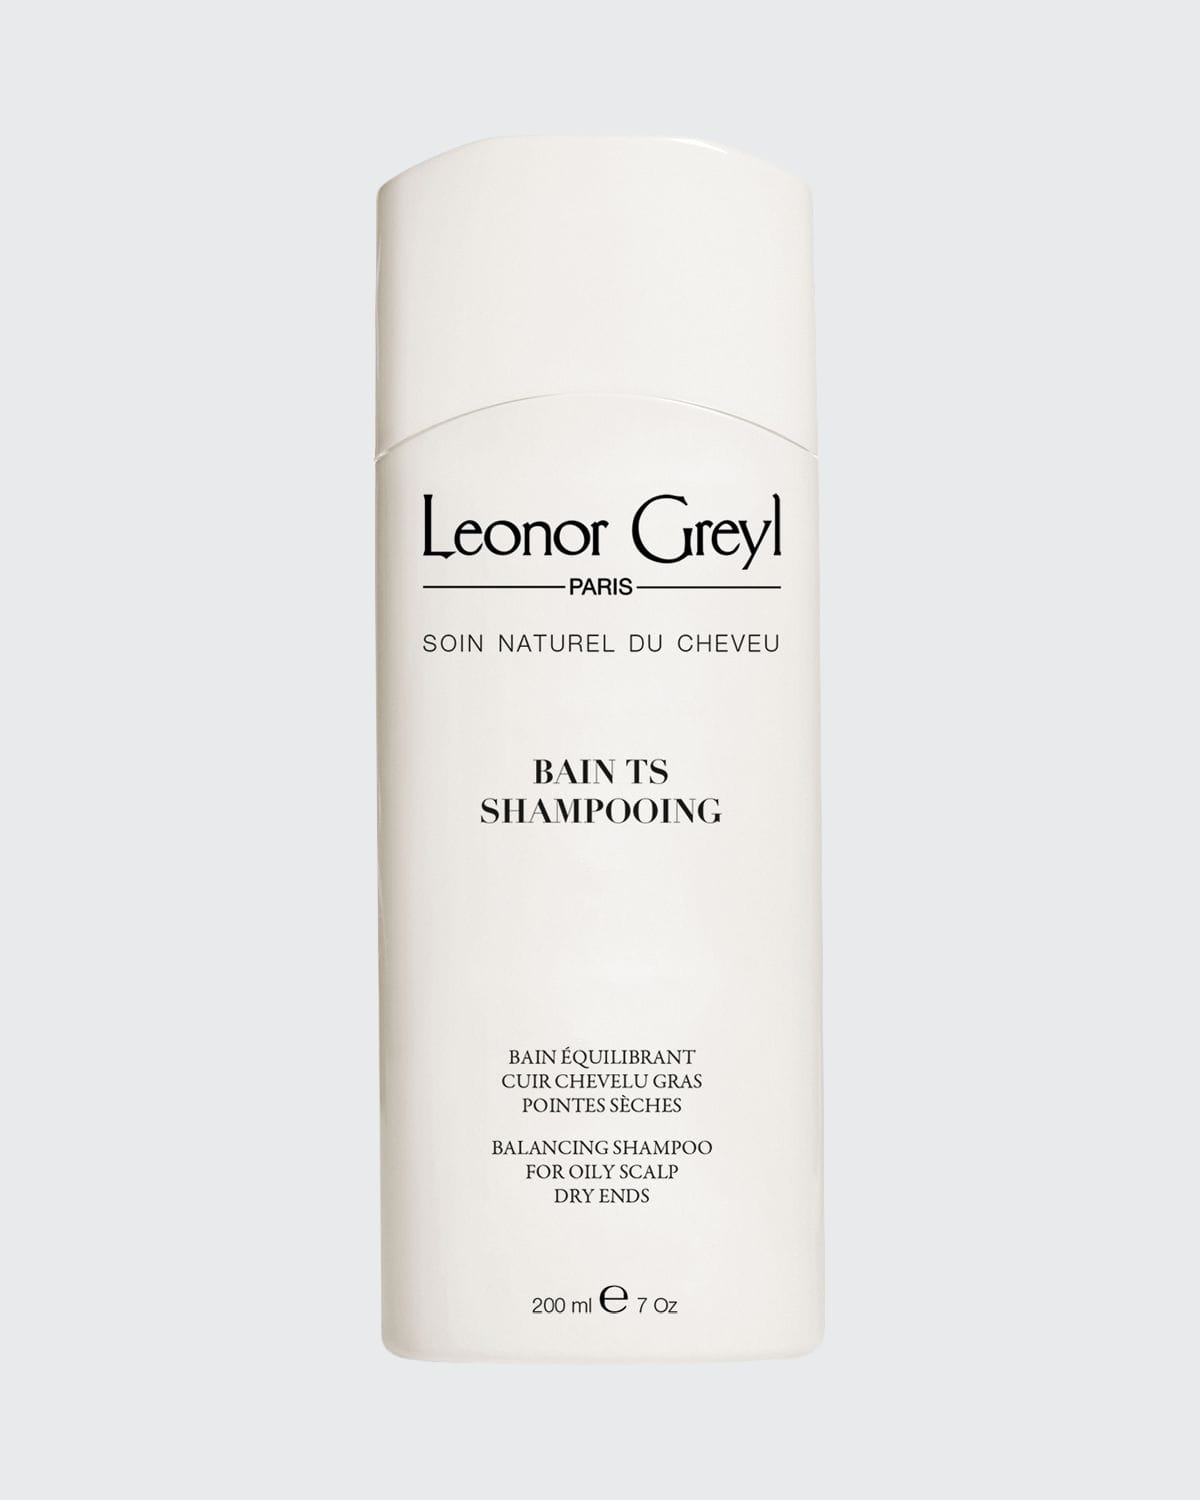 Bain TS Shampooing (Balancing Shampoo for Oily Scalp and Dry Ends),6.7 oz./ 200 mL